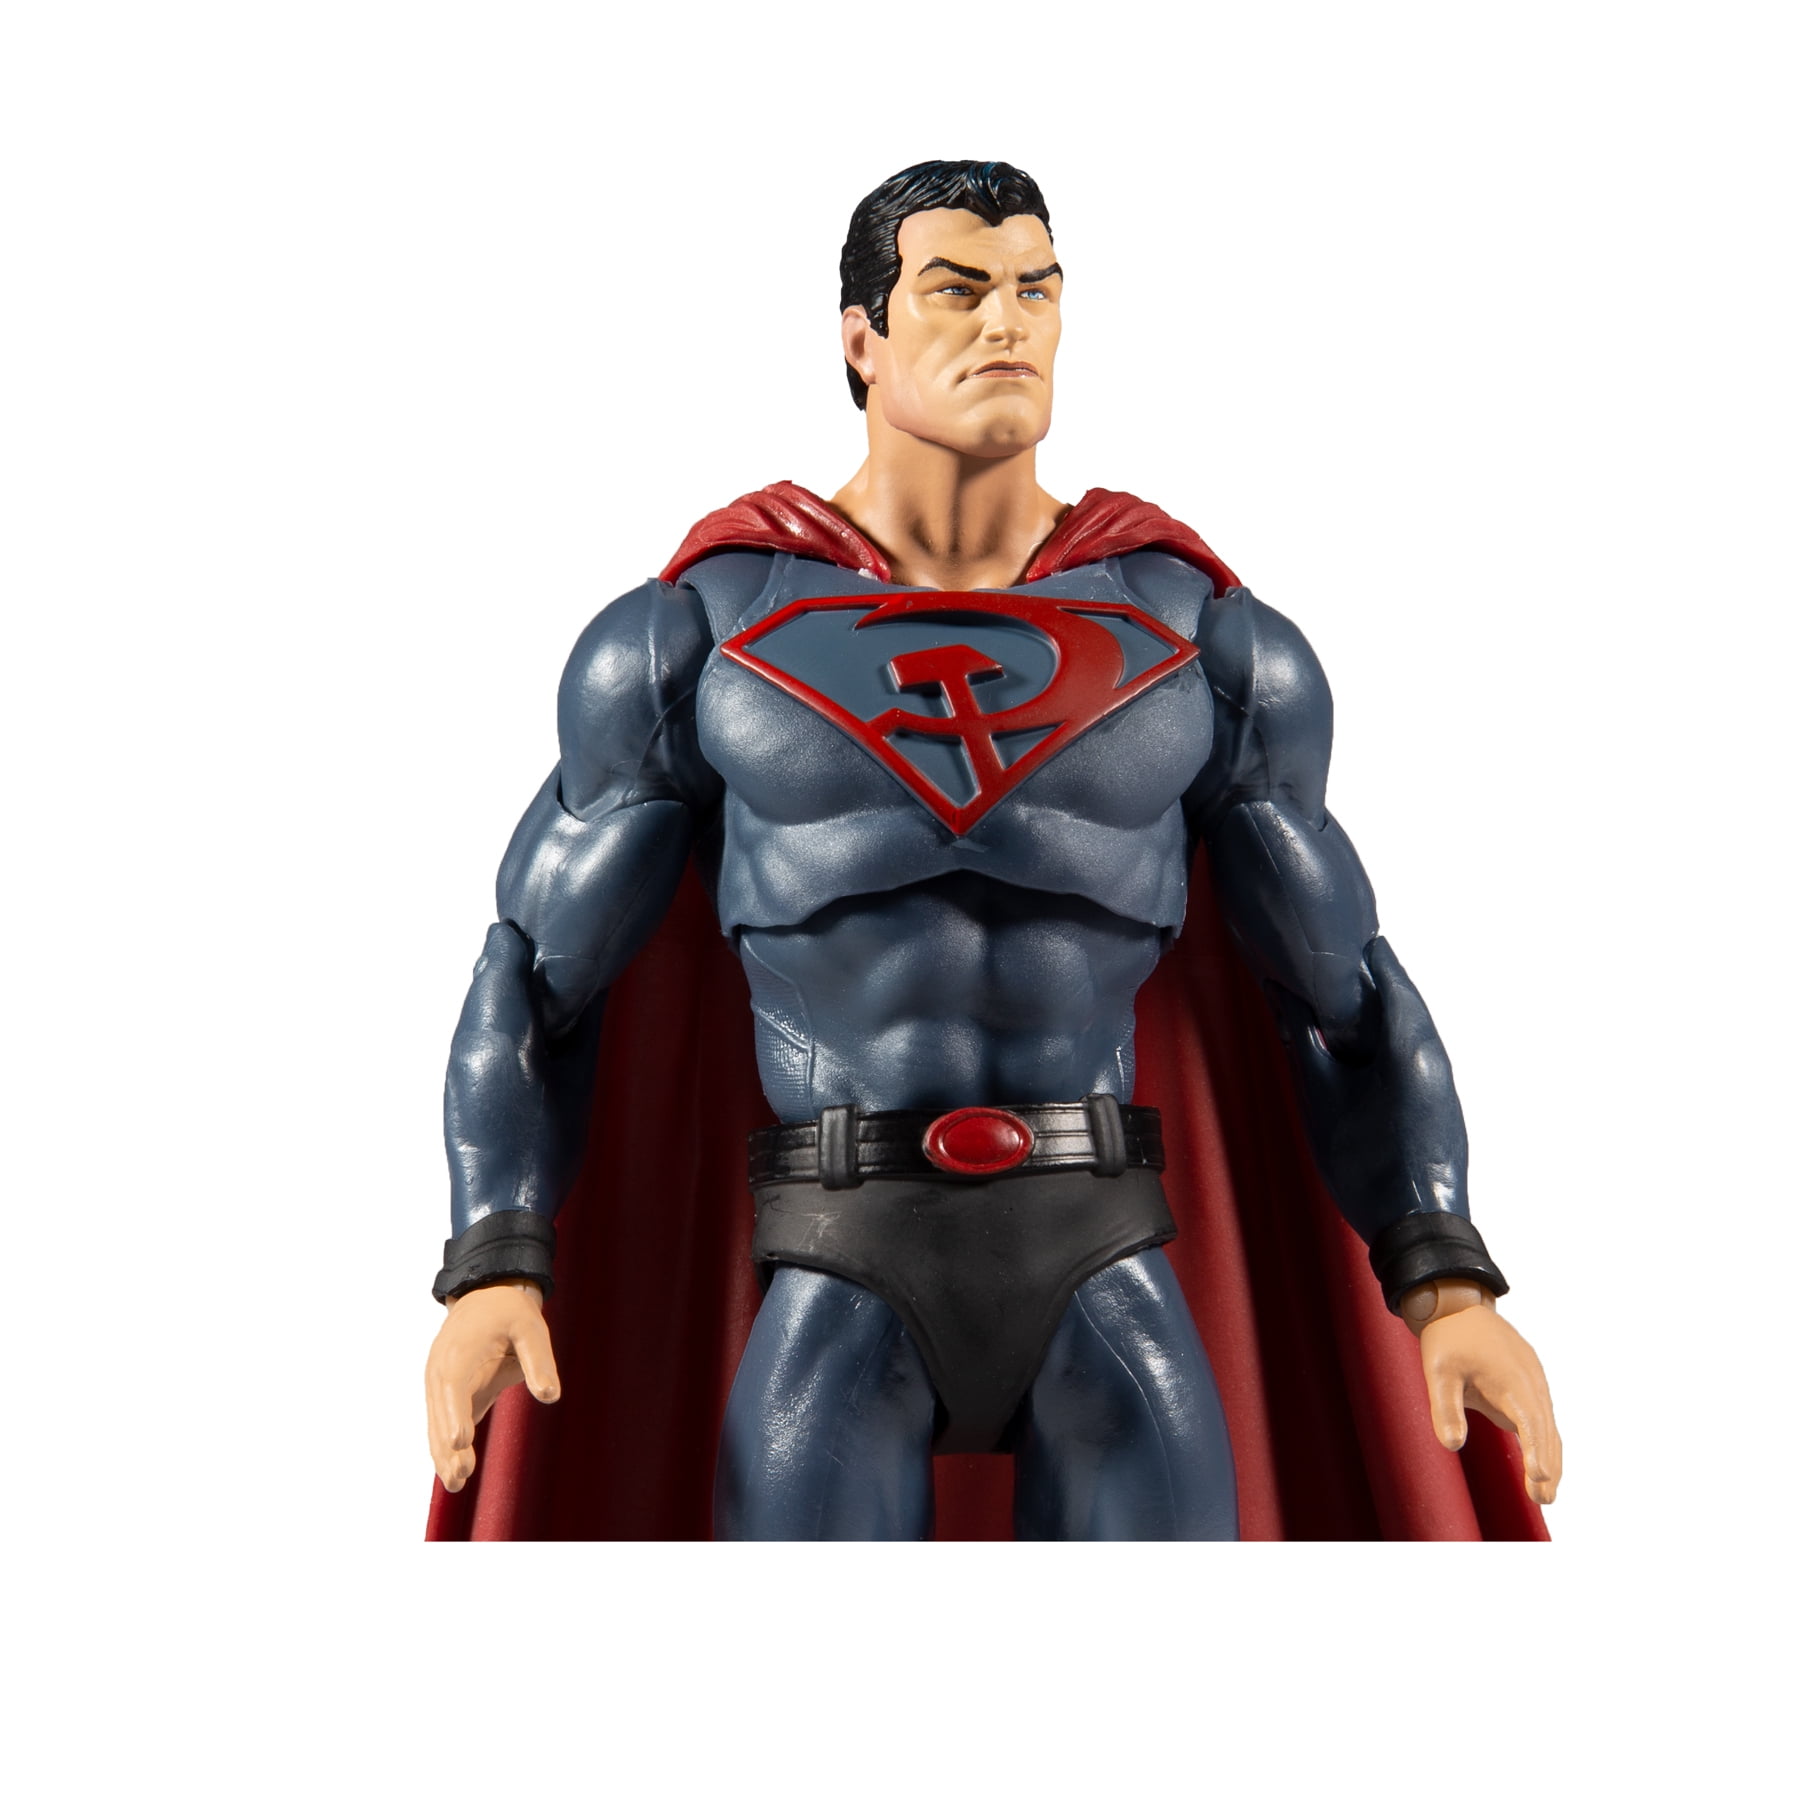 Custom Super Powers Superman Red & Blue Set 2 Pack Read Description 